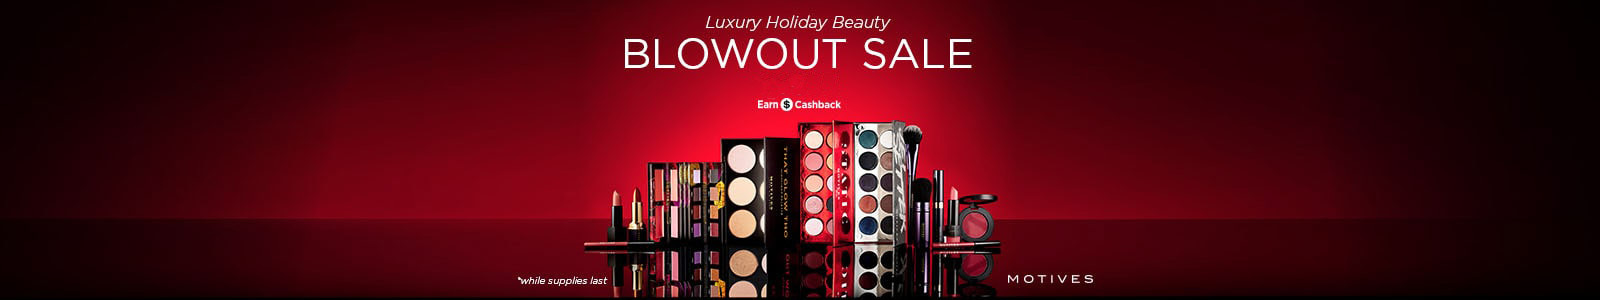 Motives Luxury Holiday Beauty Blowout Sale